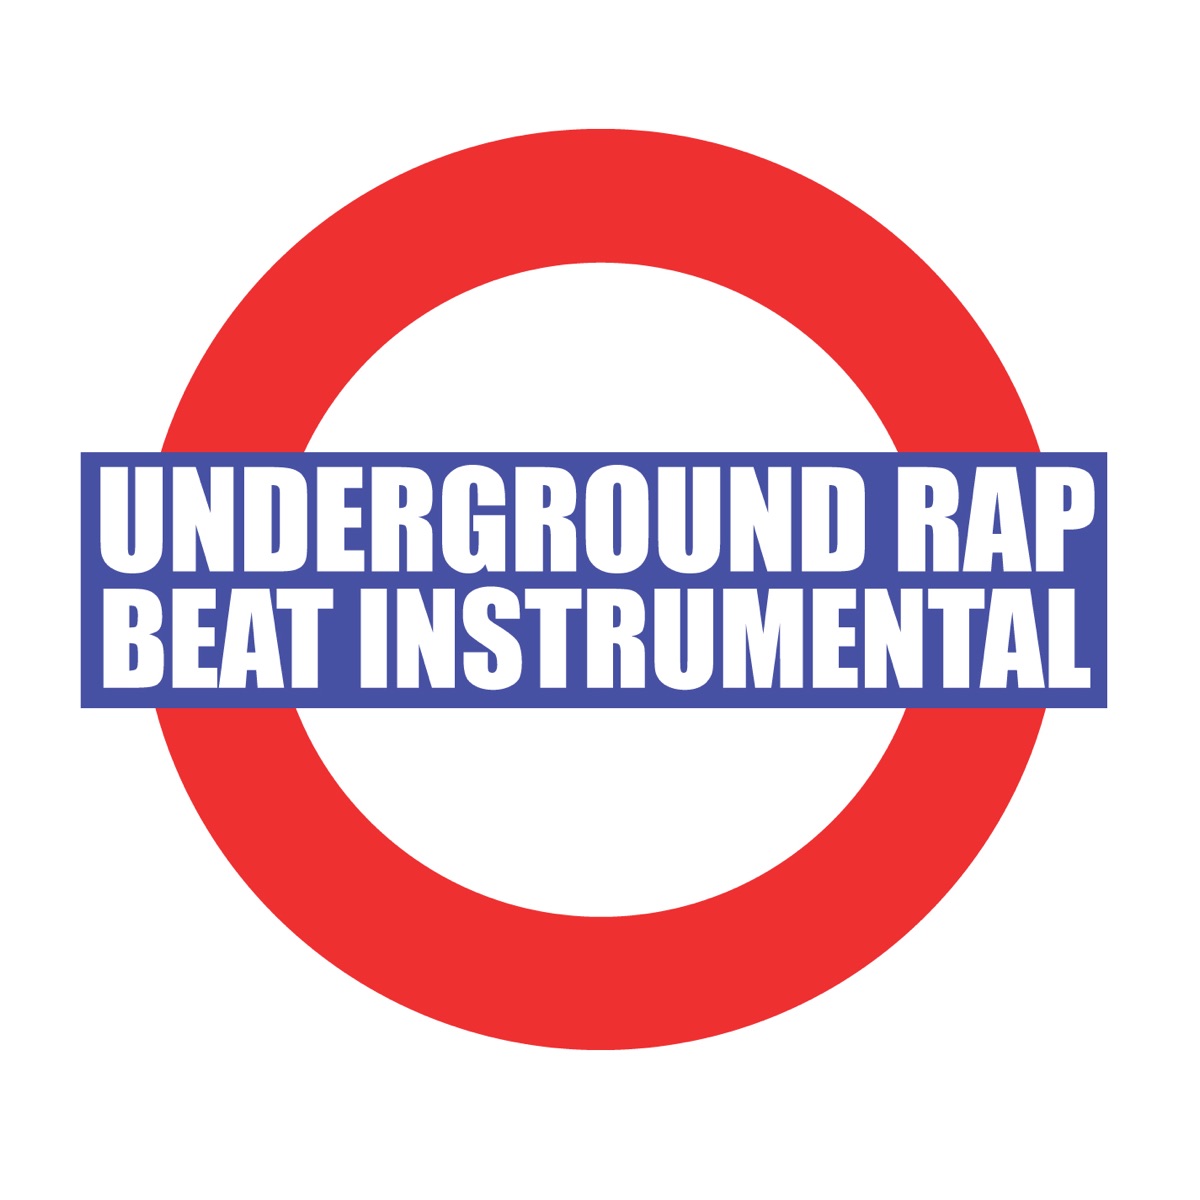 Underground Rap Beat Instrumental - Single - Album by AesUno - Apple Music